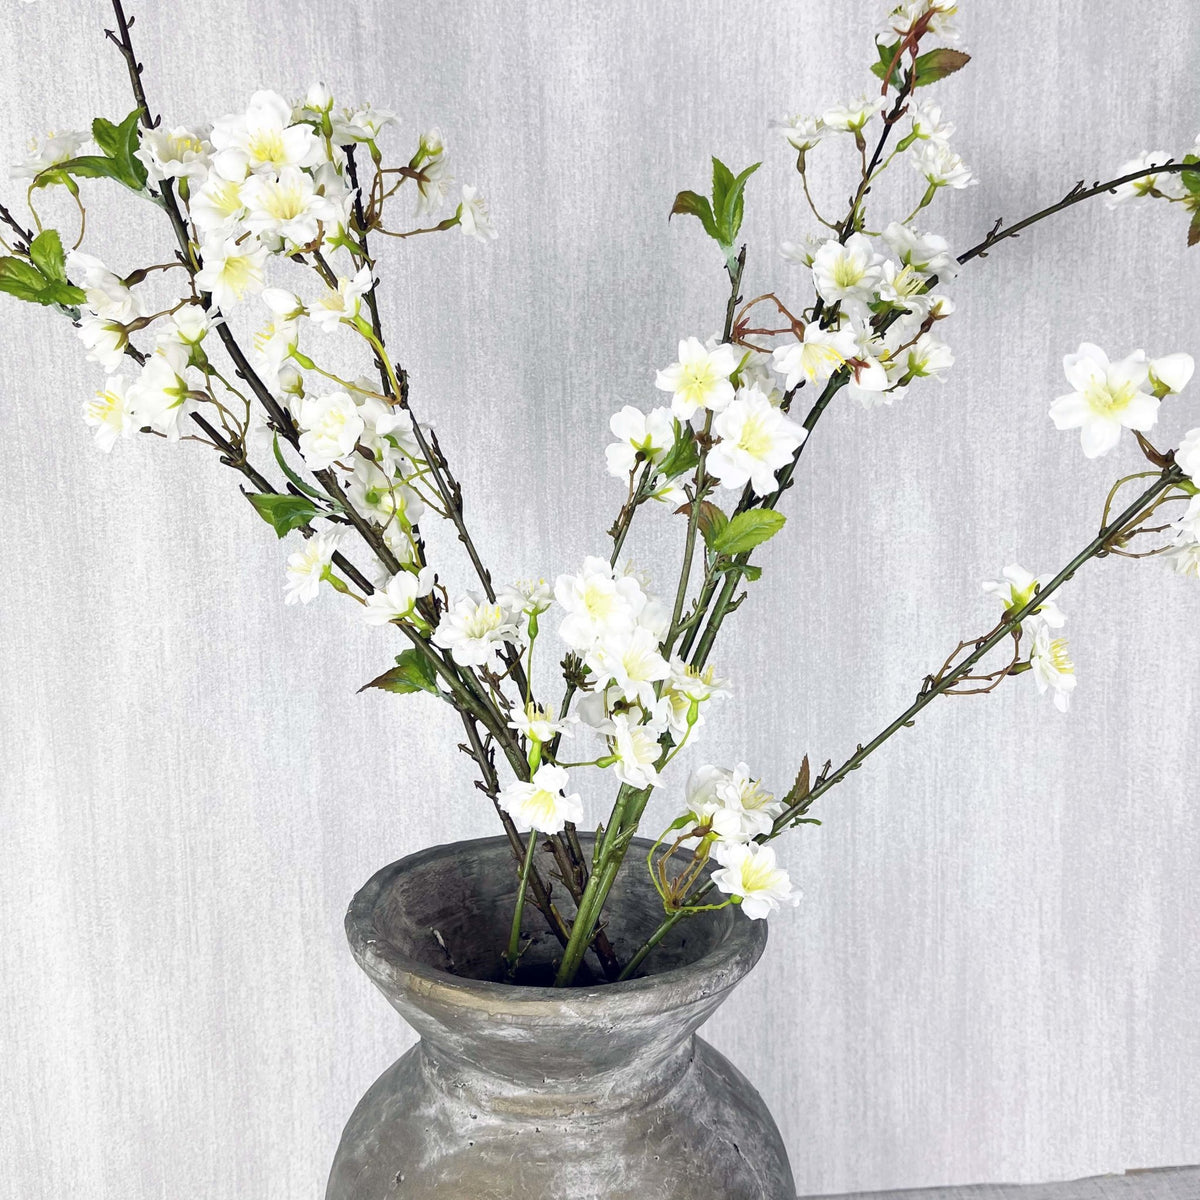 White Cherry Blossom Spray in antique vase